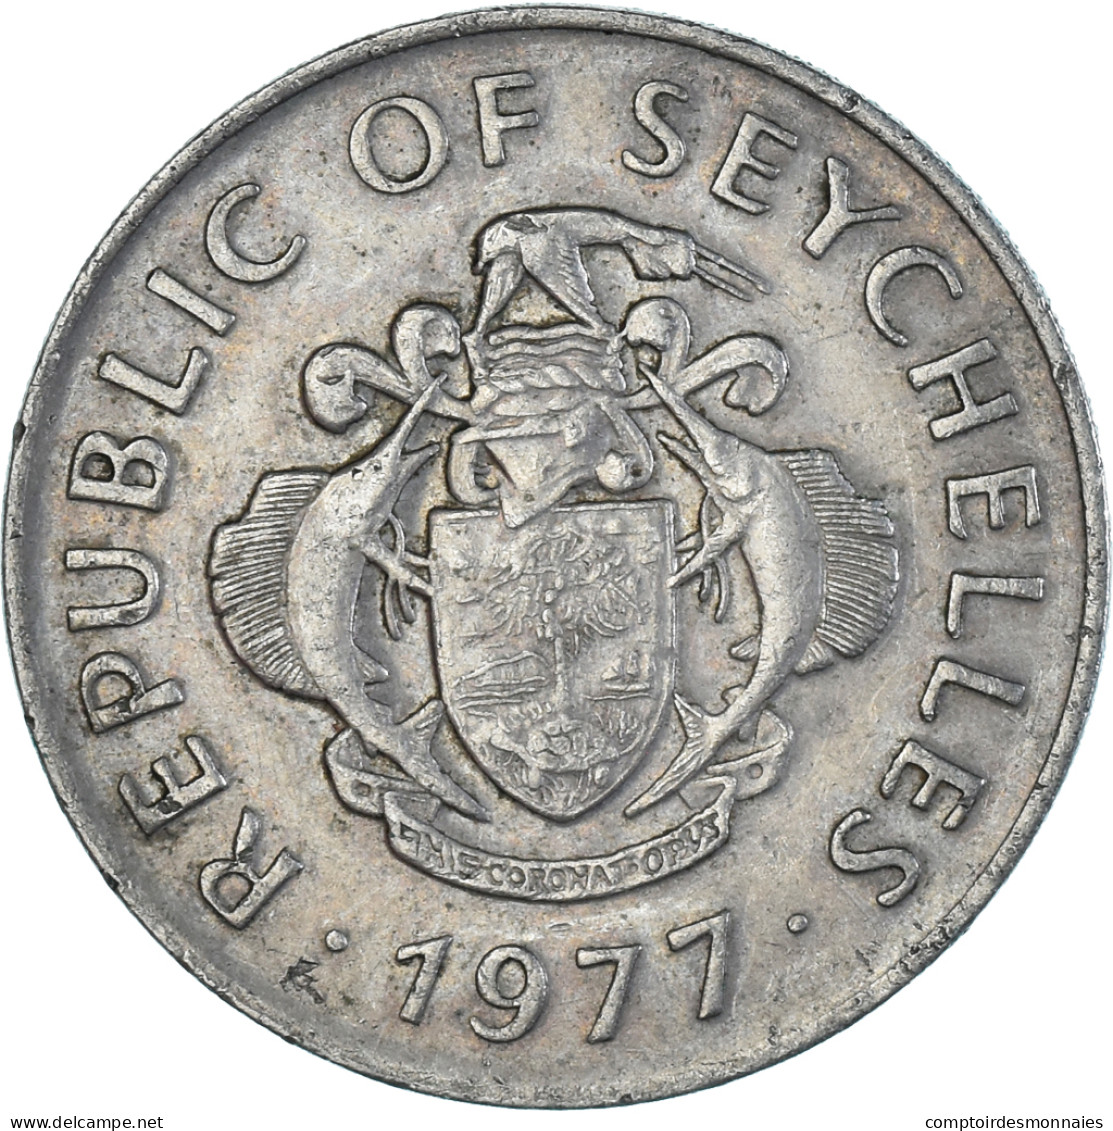 Monnaie, Seychelles, Rupee, 1977 - Seychelles